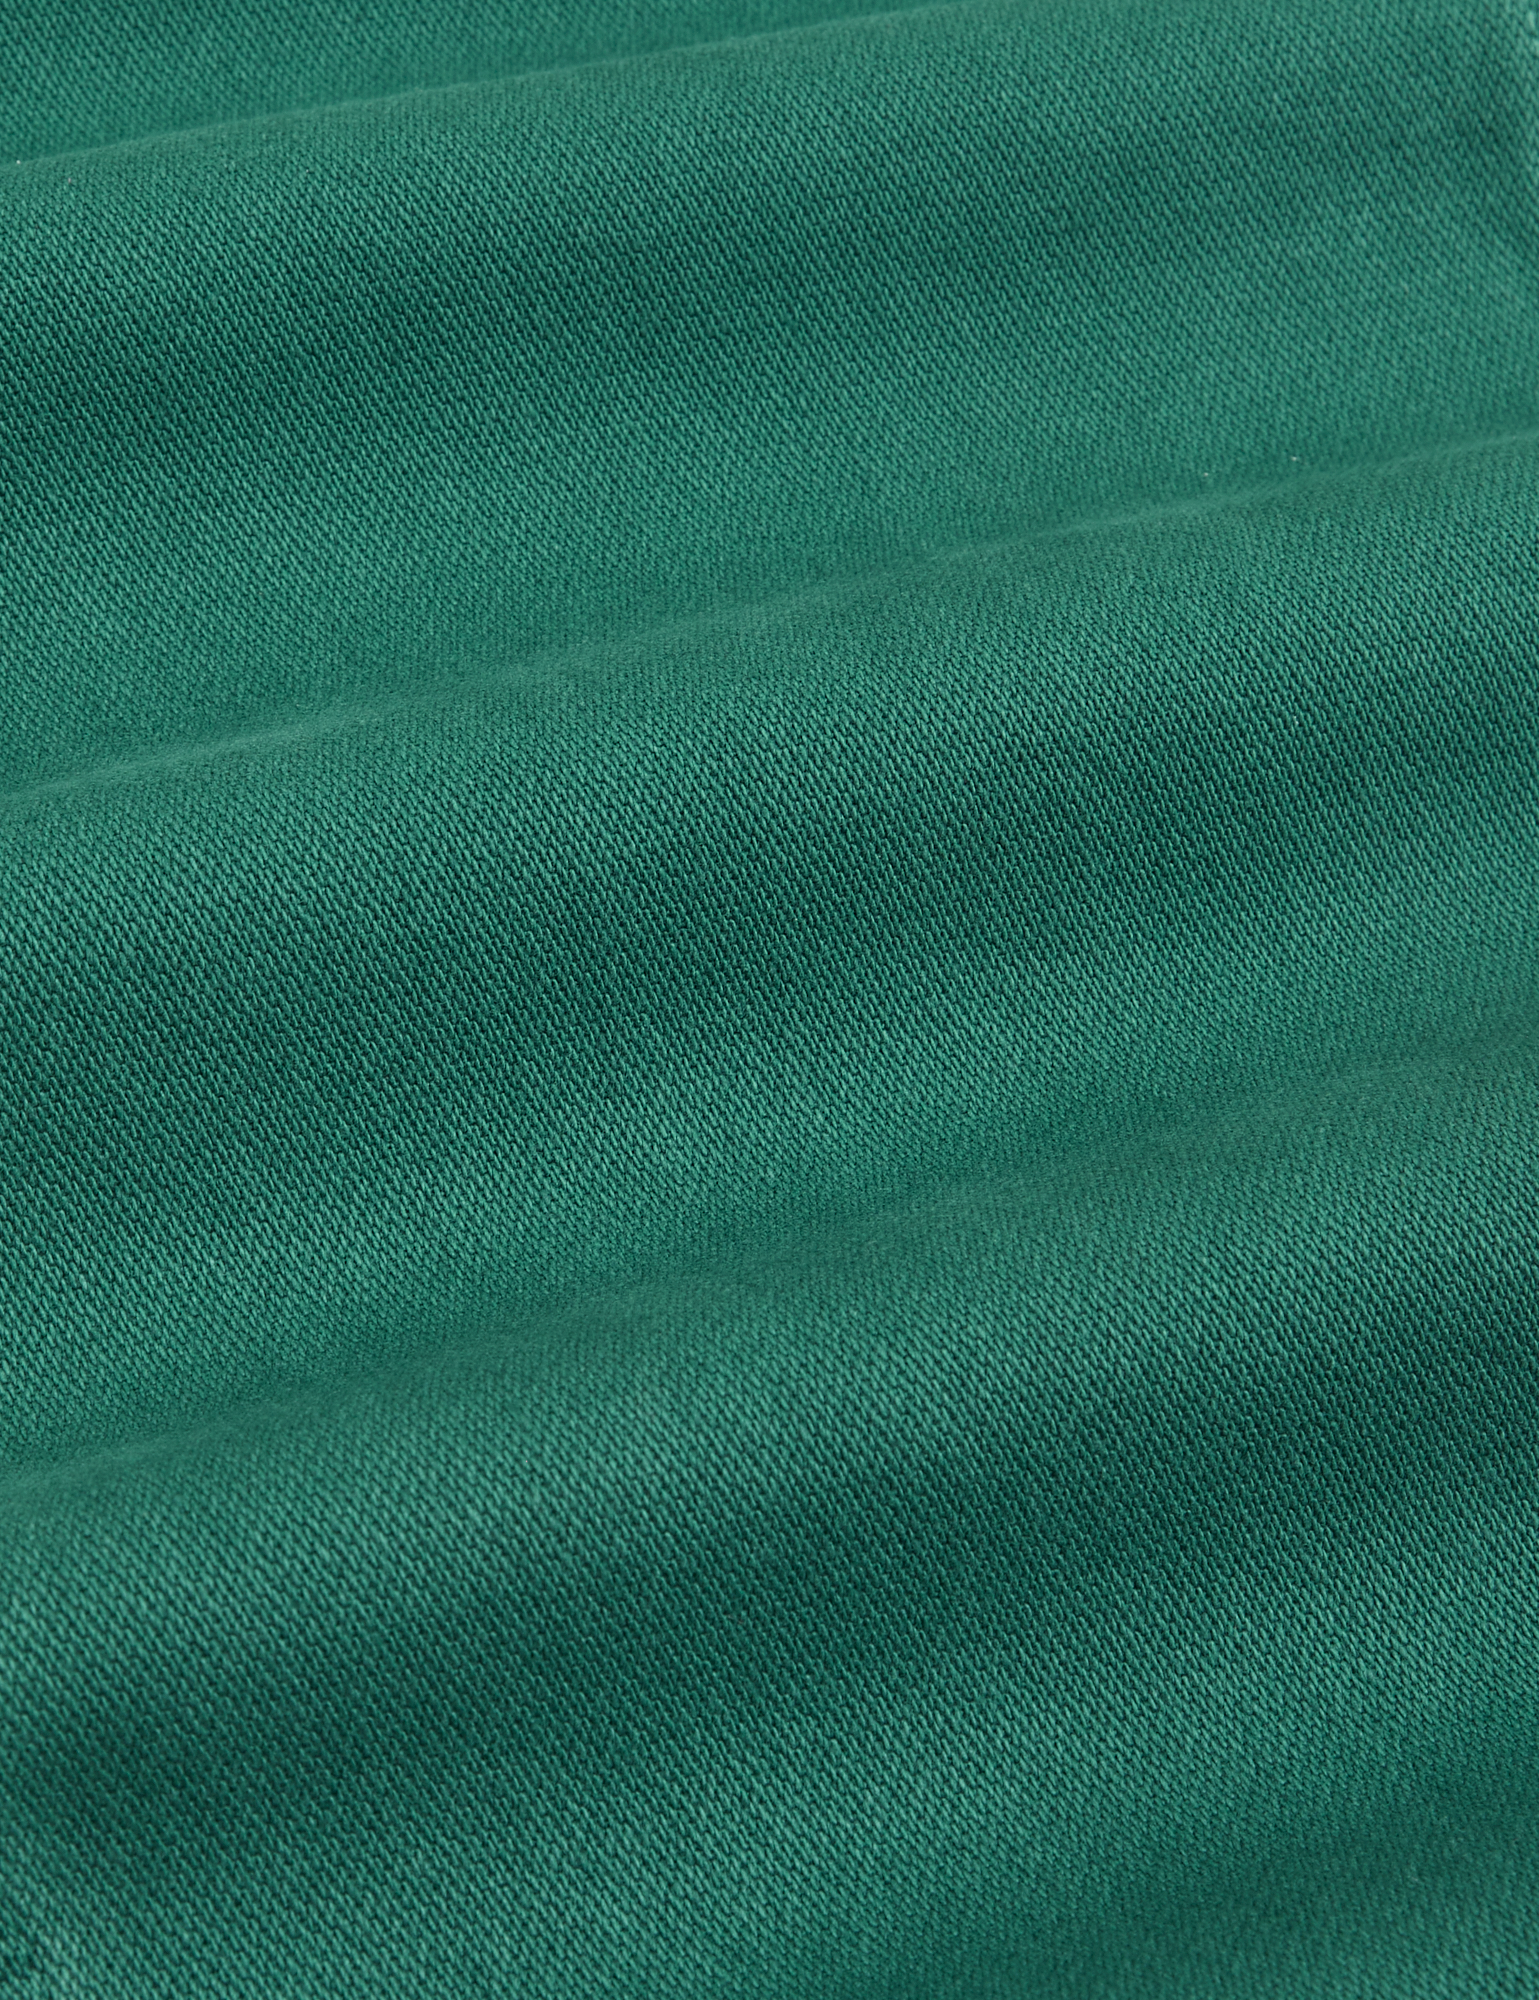 Original Overalls in Mono Hunter Green fabric detail close up